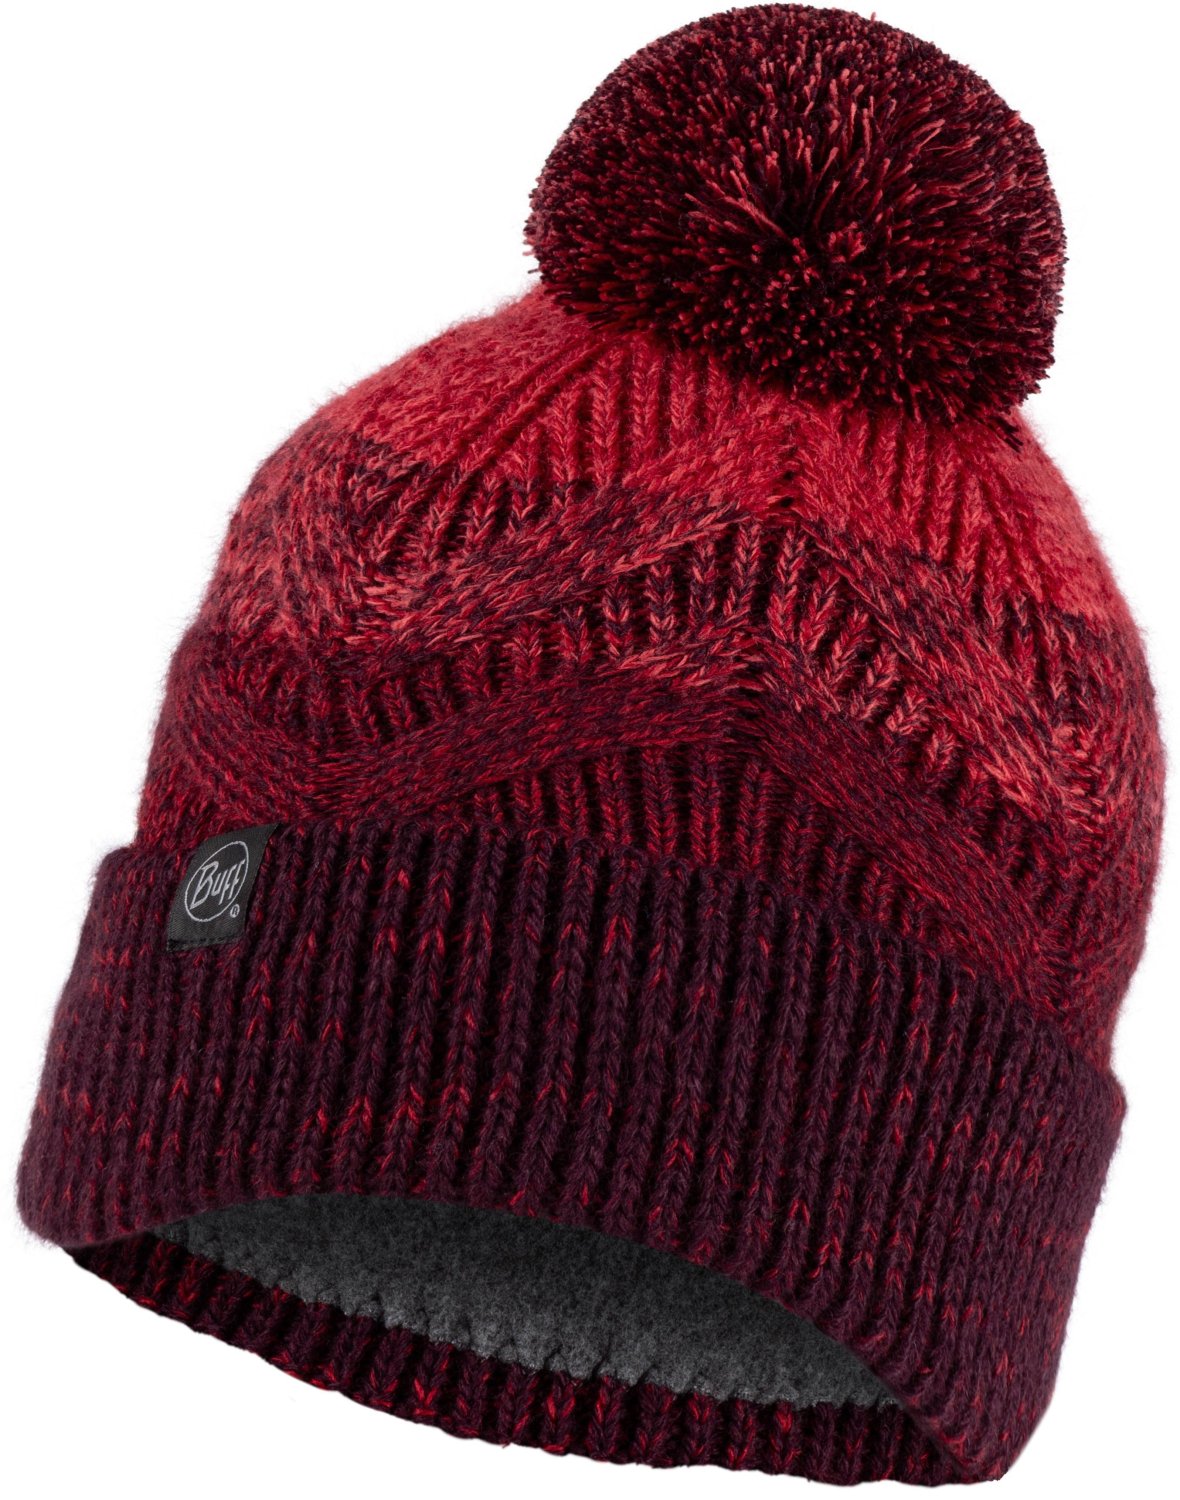 Шапка Buff Knitted & Fleece Band Hat Masha Mahogany US:one size, 120855.416.10.00 шапка buff knitted hat nilah nilah ice us one size 132322 798 10 00